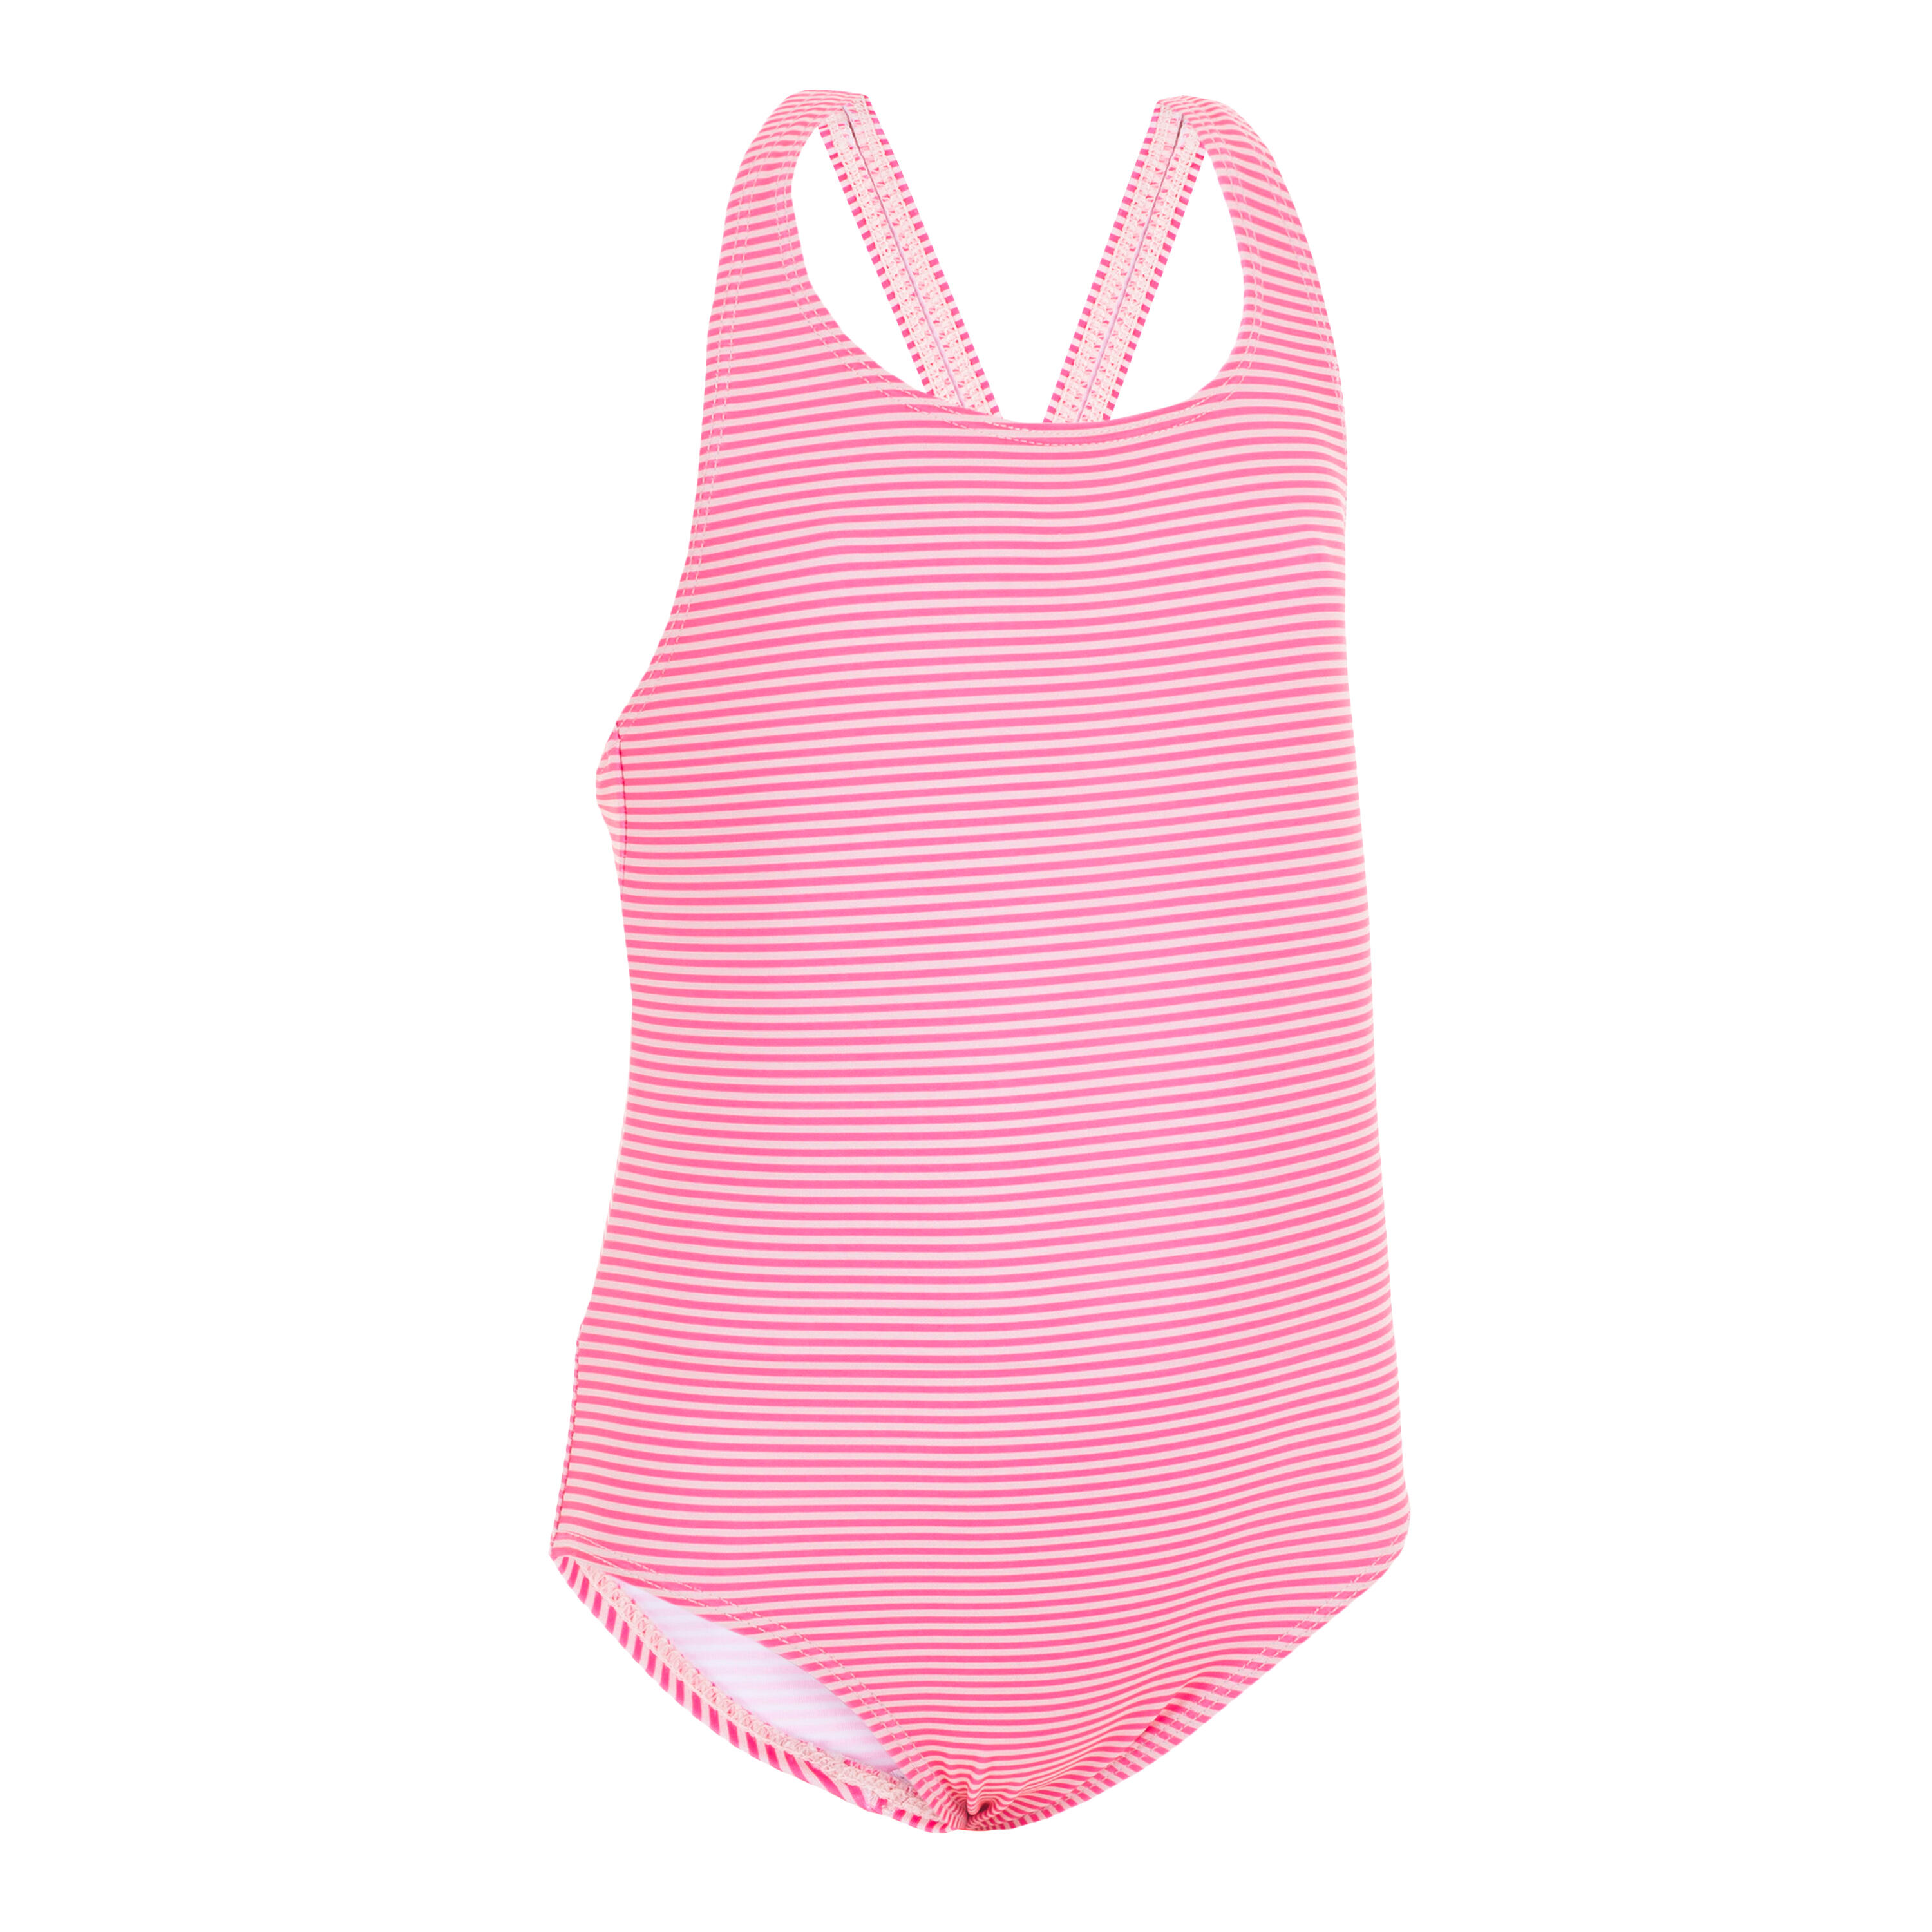 Baby Girls' 1-Piece Swimsuit - Pink Stripes Print 1/5